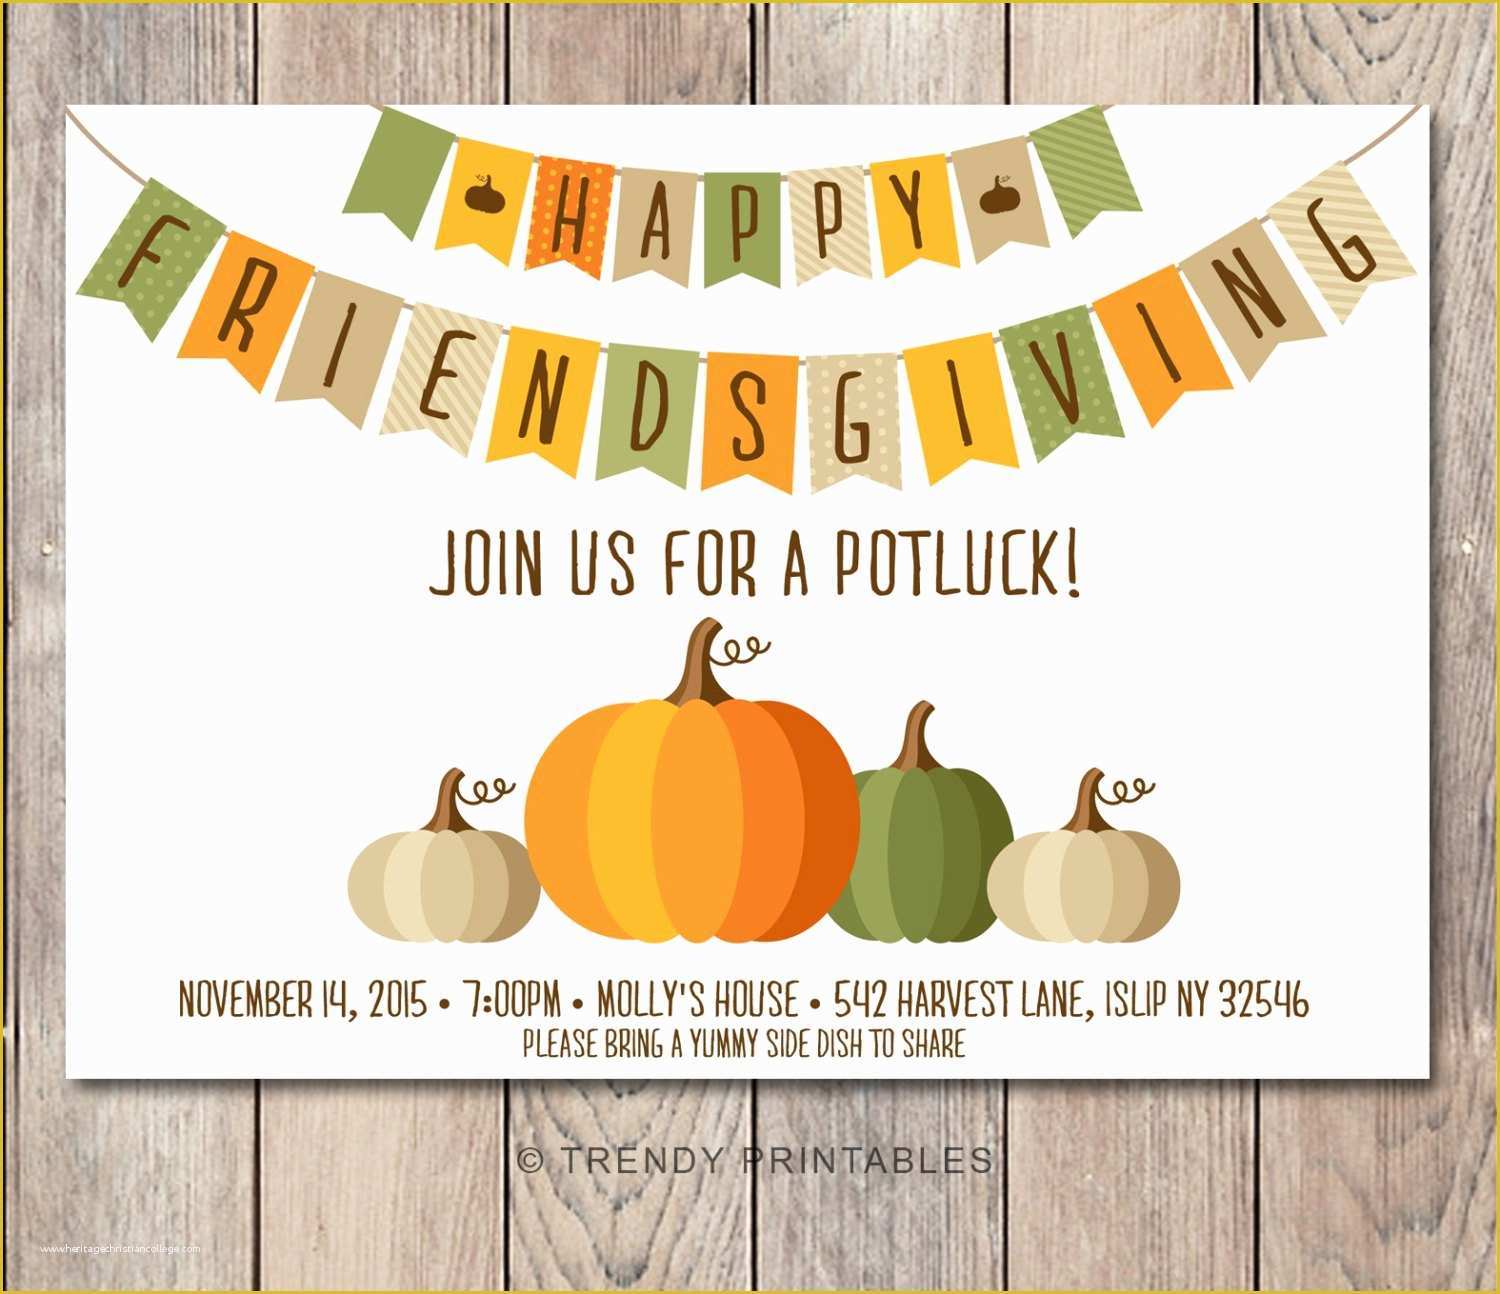 Friendsgiving Invitation Free Template Of Potluck Invitation Friendsgiving Thanksgiving Invitation